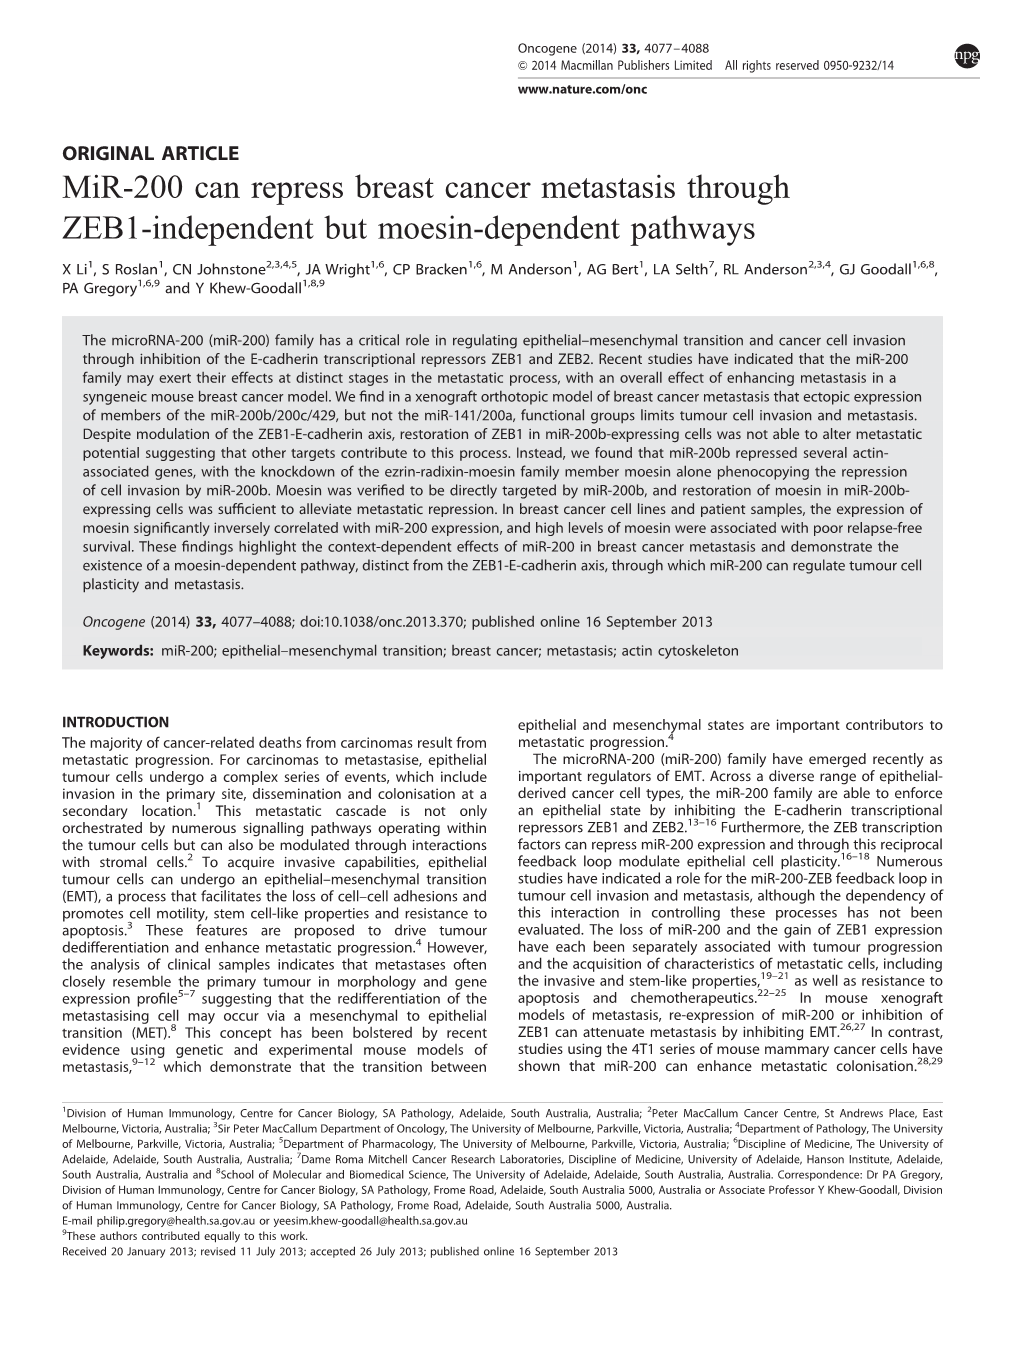 Mir-200 Can Repress Breast Cancer Metastasis Through ZEB1-Independent but Moesin-Dependent Pathways